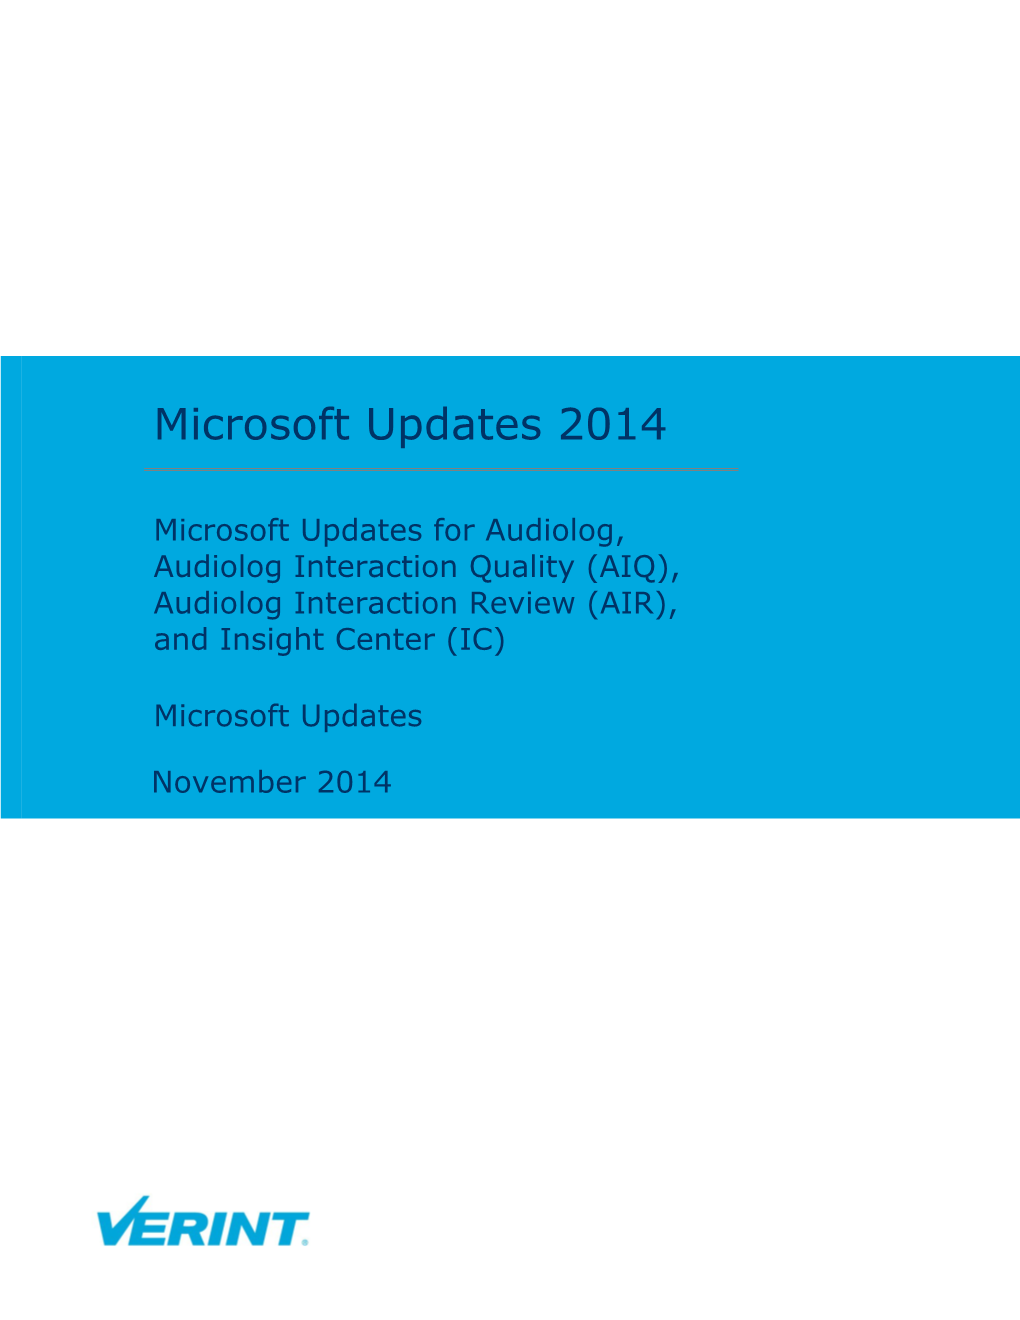 Microsoft Update for Audiolog